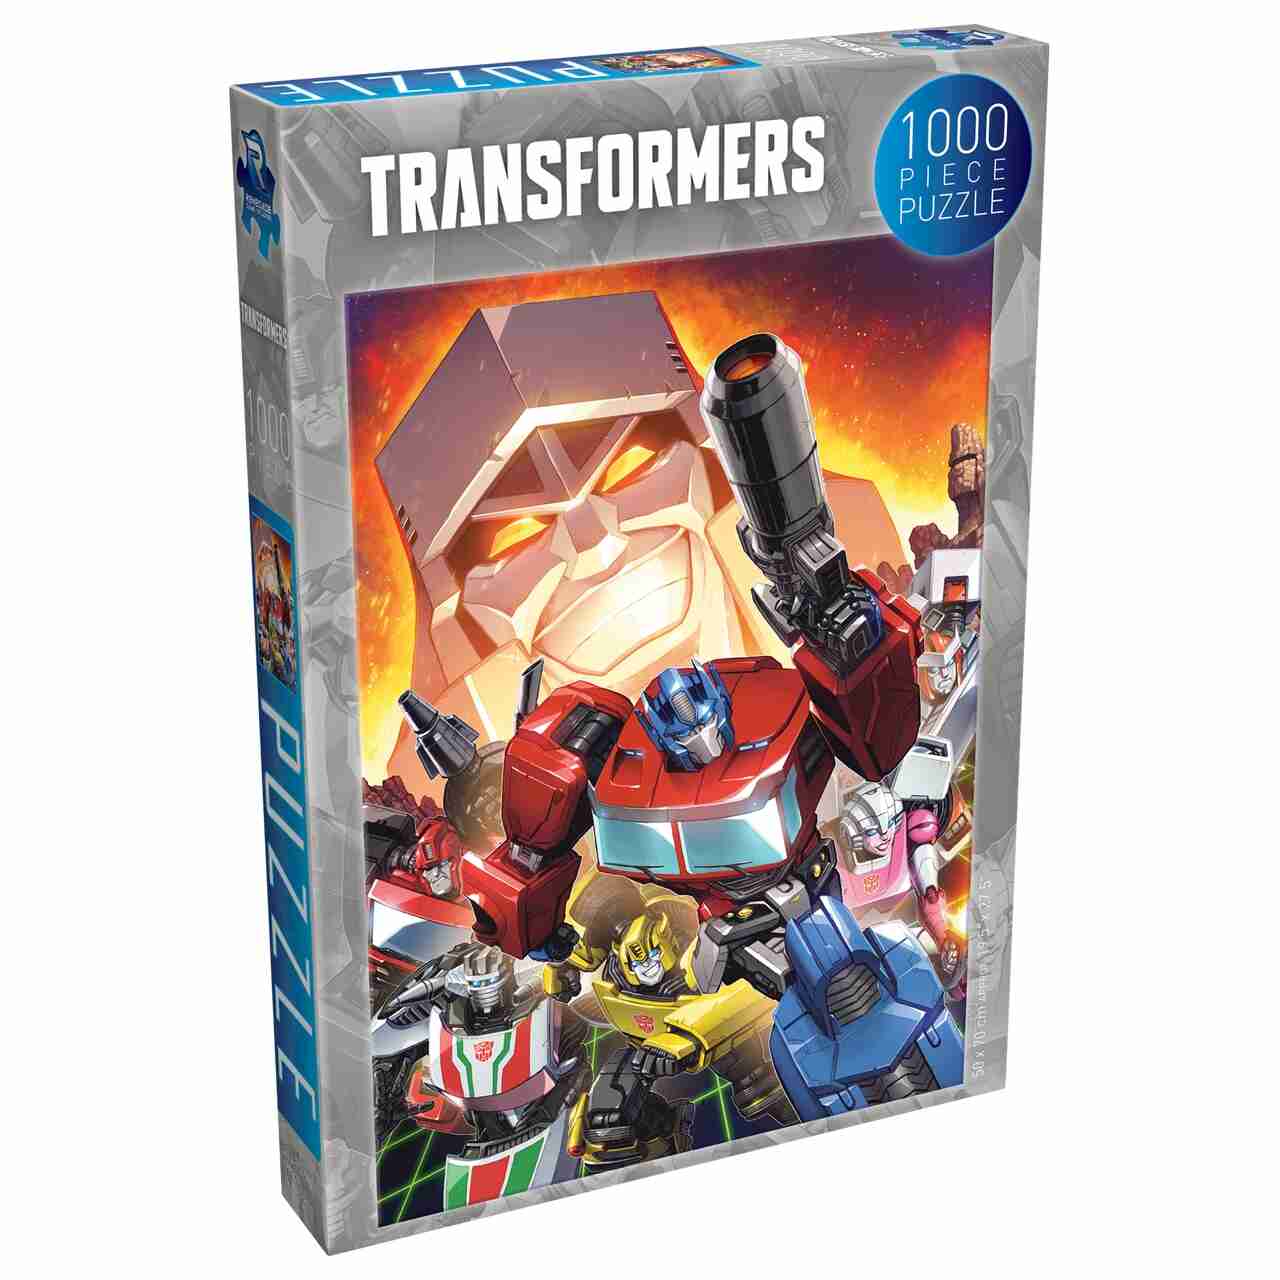 Transformers (1000 Piece Puzzle) 